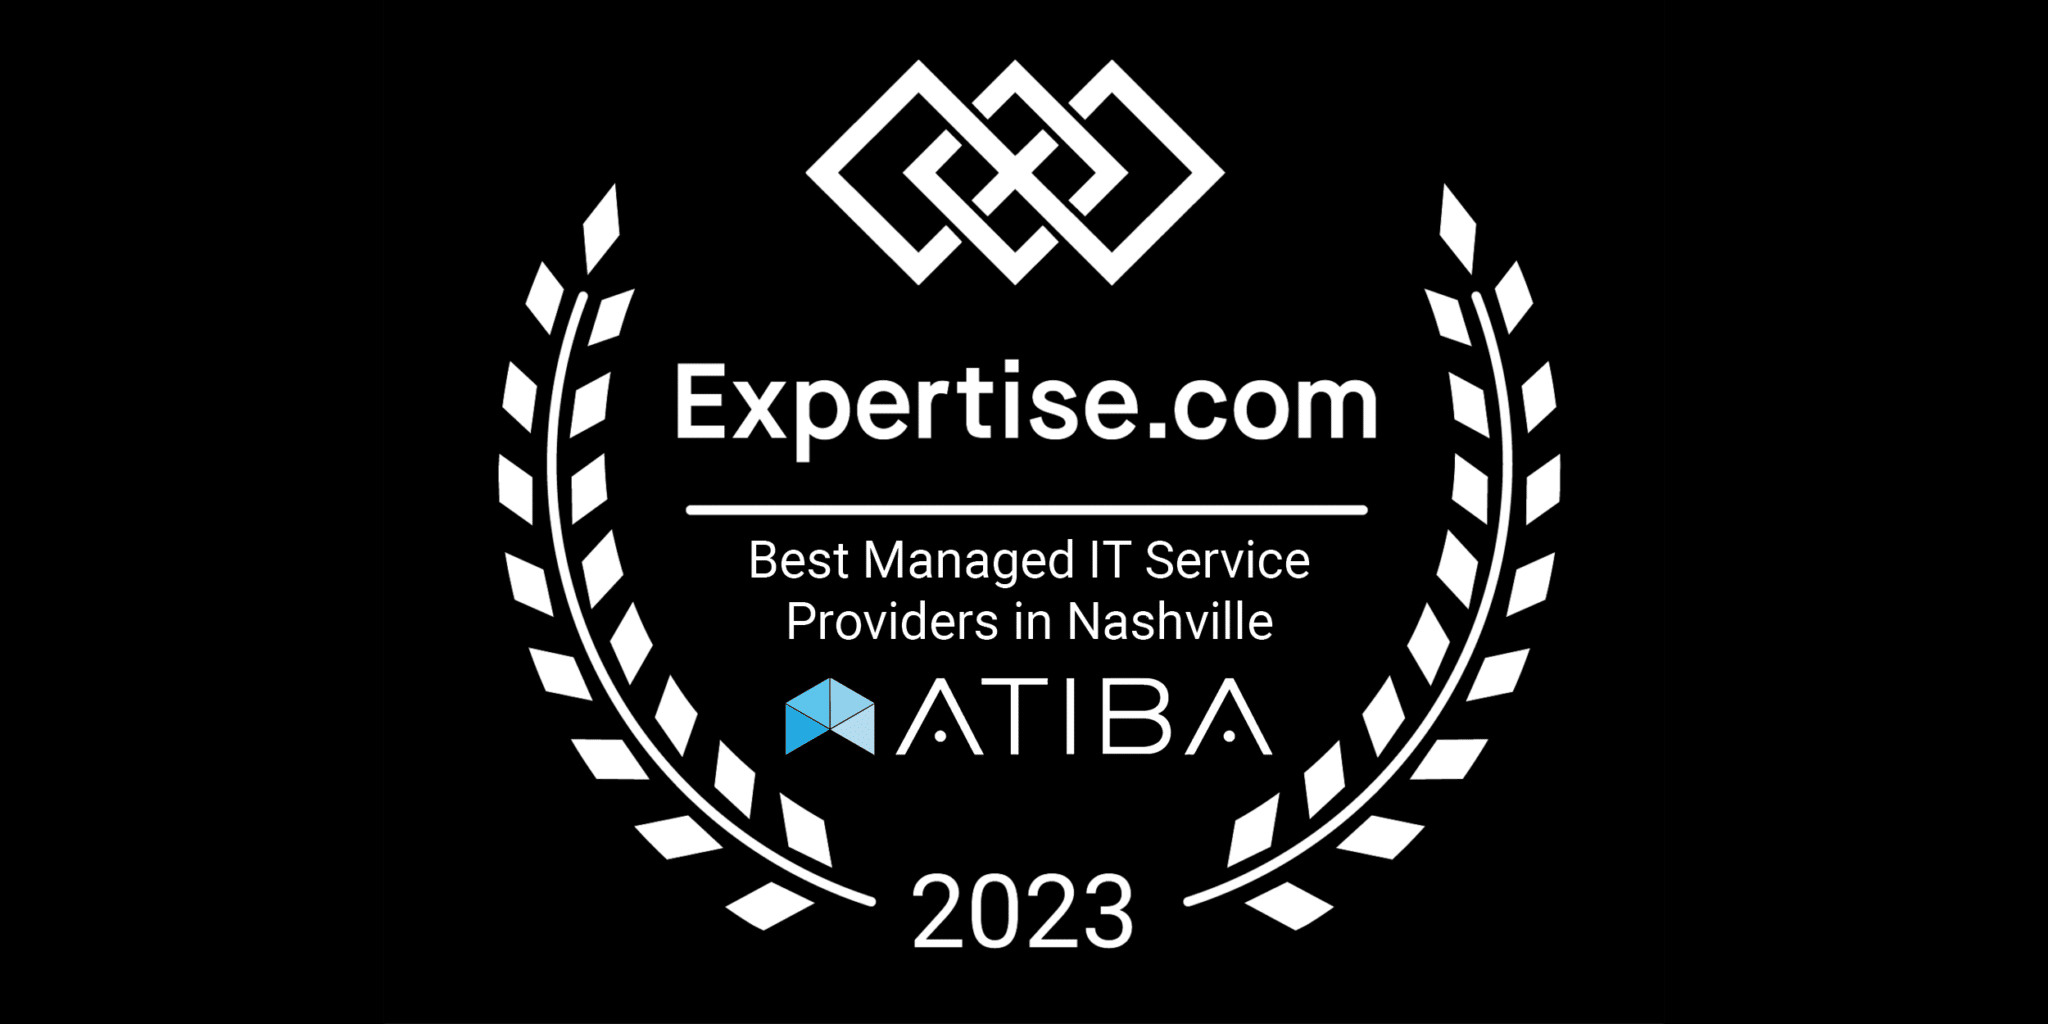 Expertise - Managed IT Service Provider Award 2023